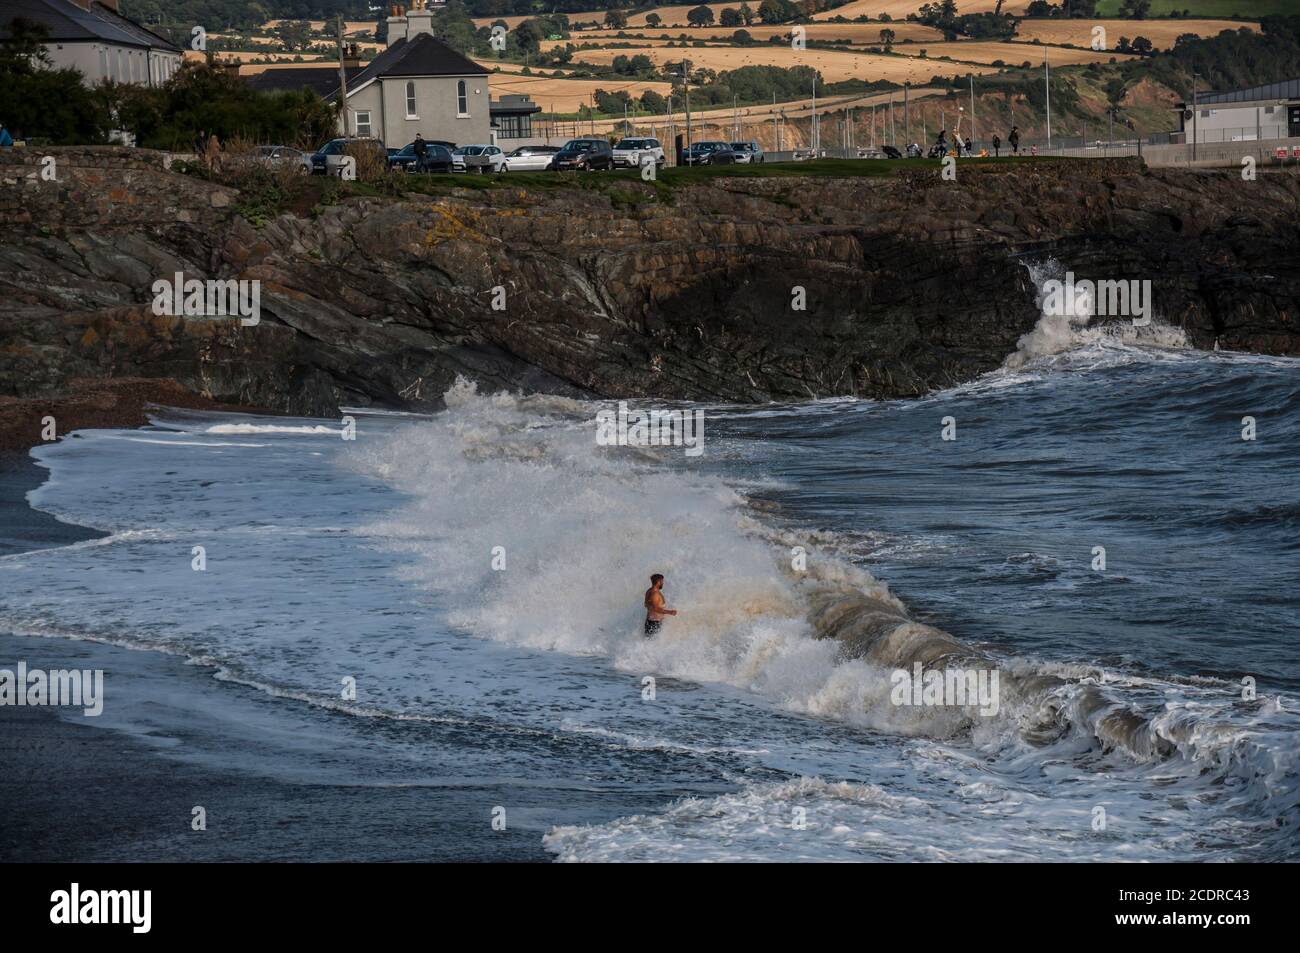 Visiting Greystones.  Mid age man stays in front of breaking wave enjoying its splashing. Stock Photo